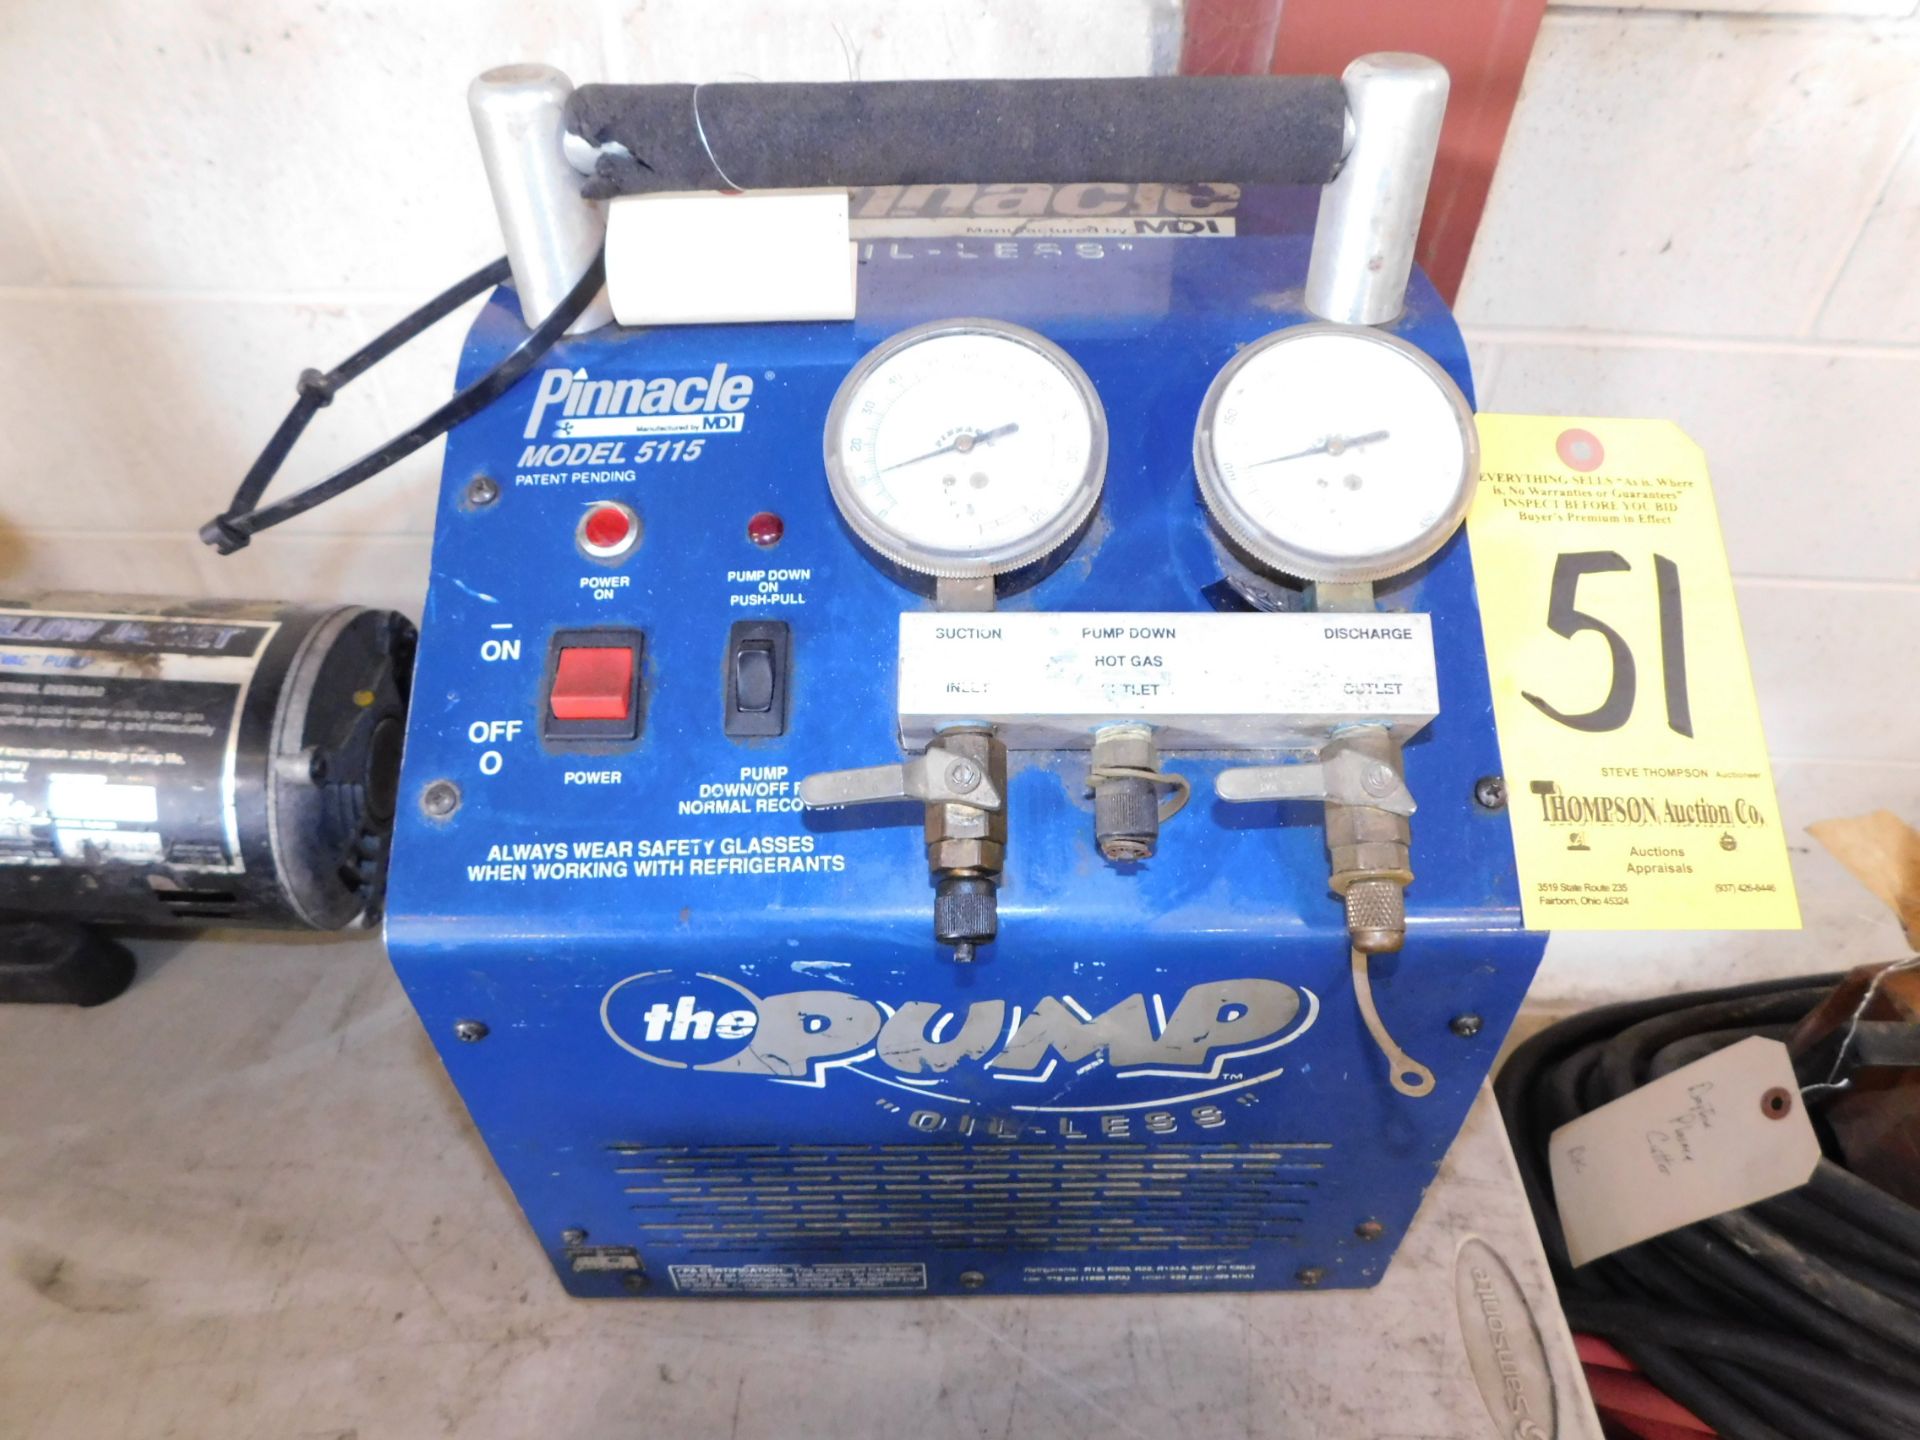 Pinnacle Model 5115 Refrigerant Recovery Pump, 115V, 1 phs